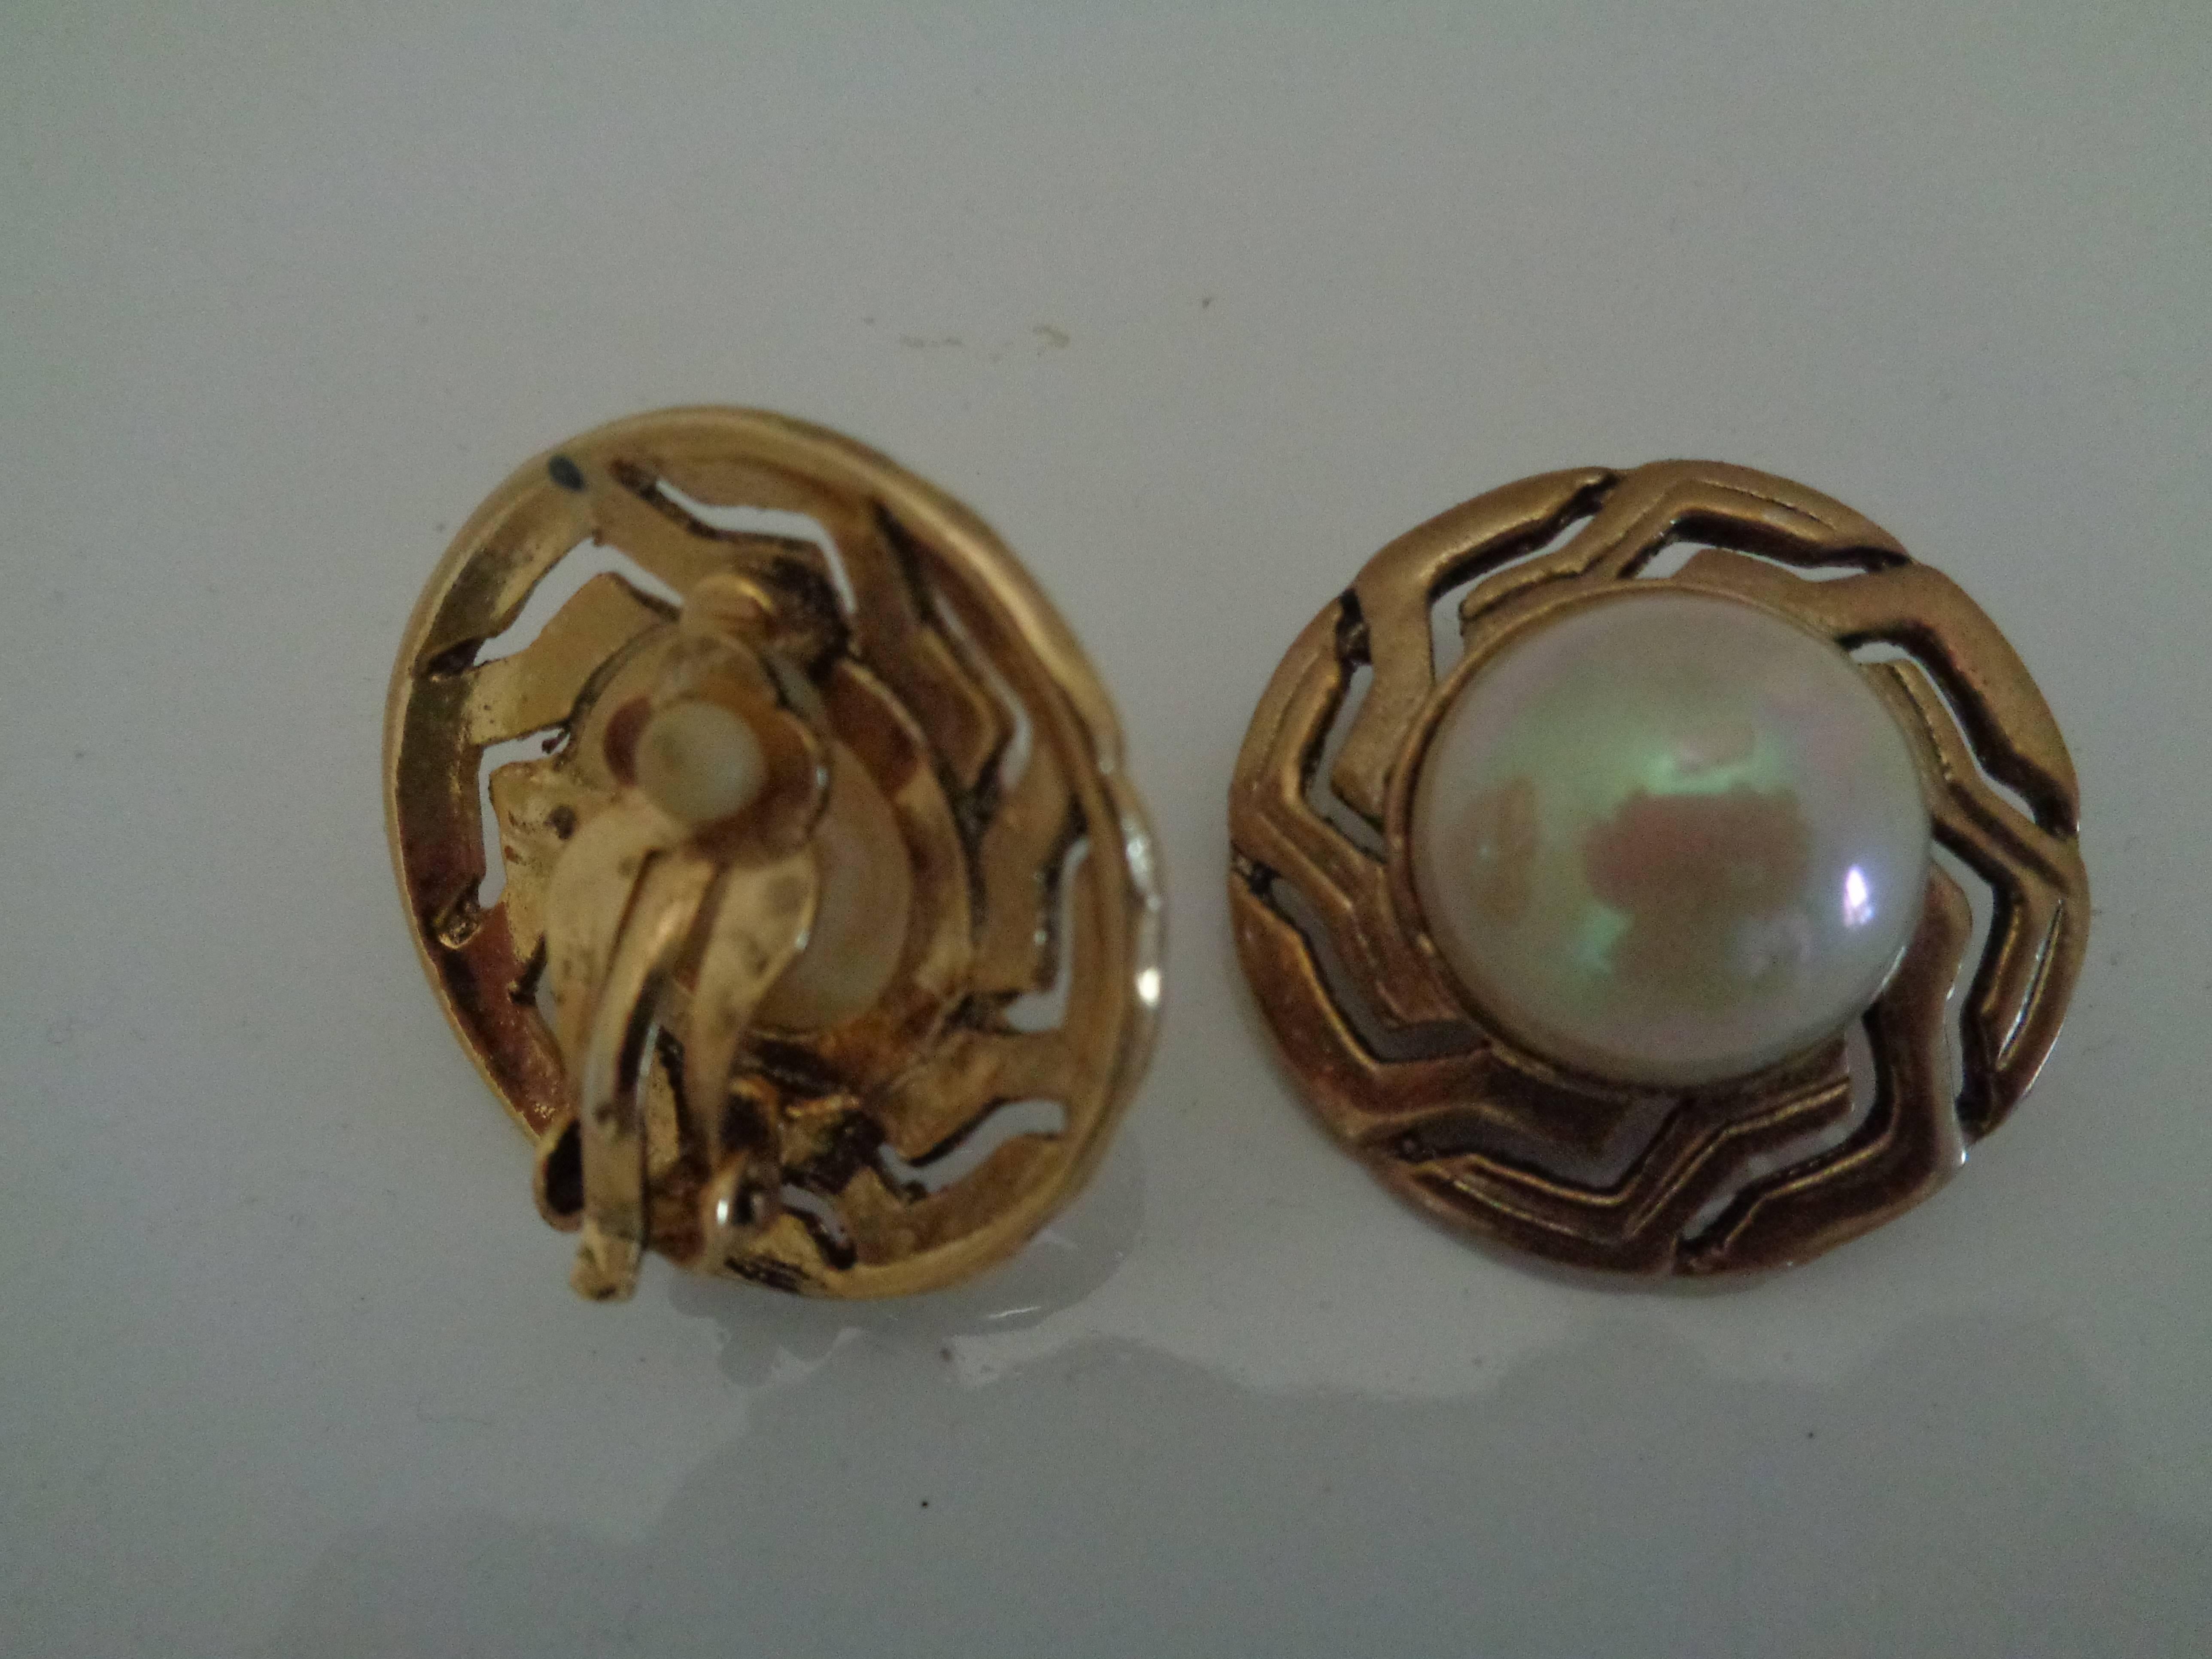 1990s Gold Tone Faux Pearls Clip on earrings

Measurements: 3 cm x 3 cm